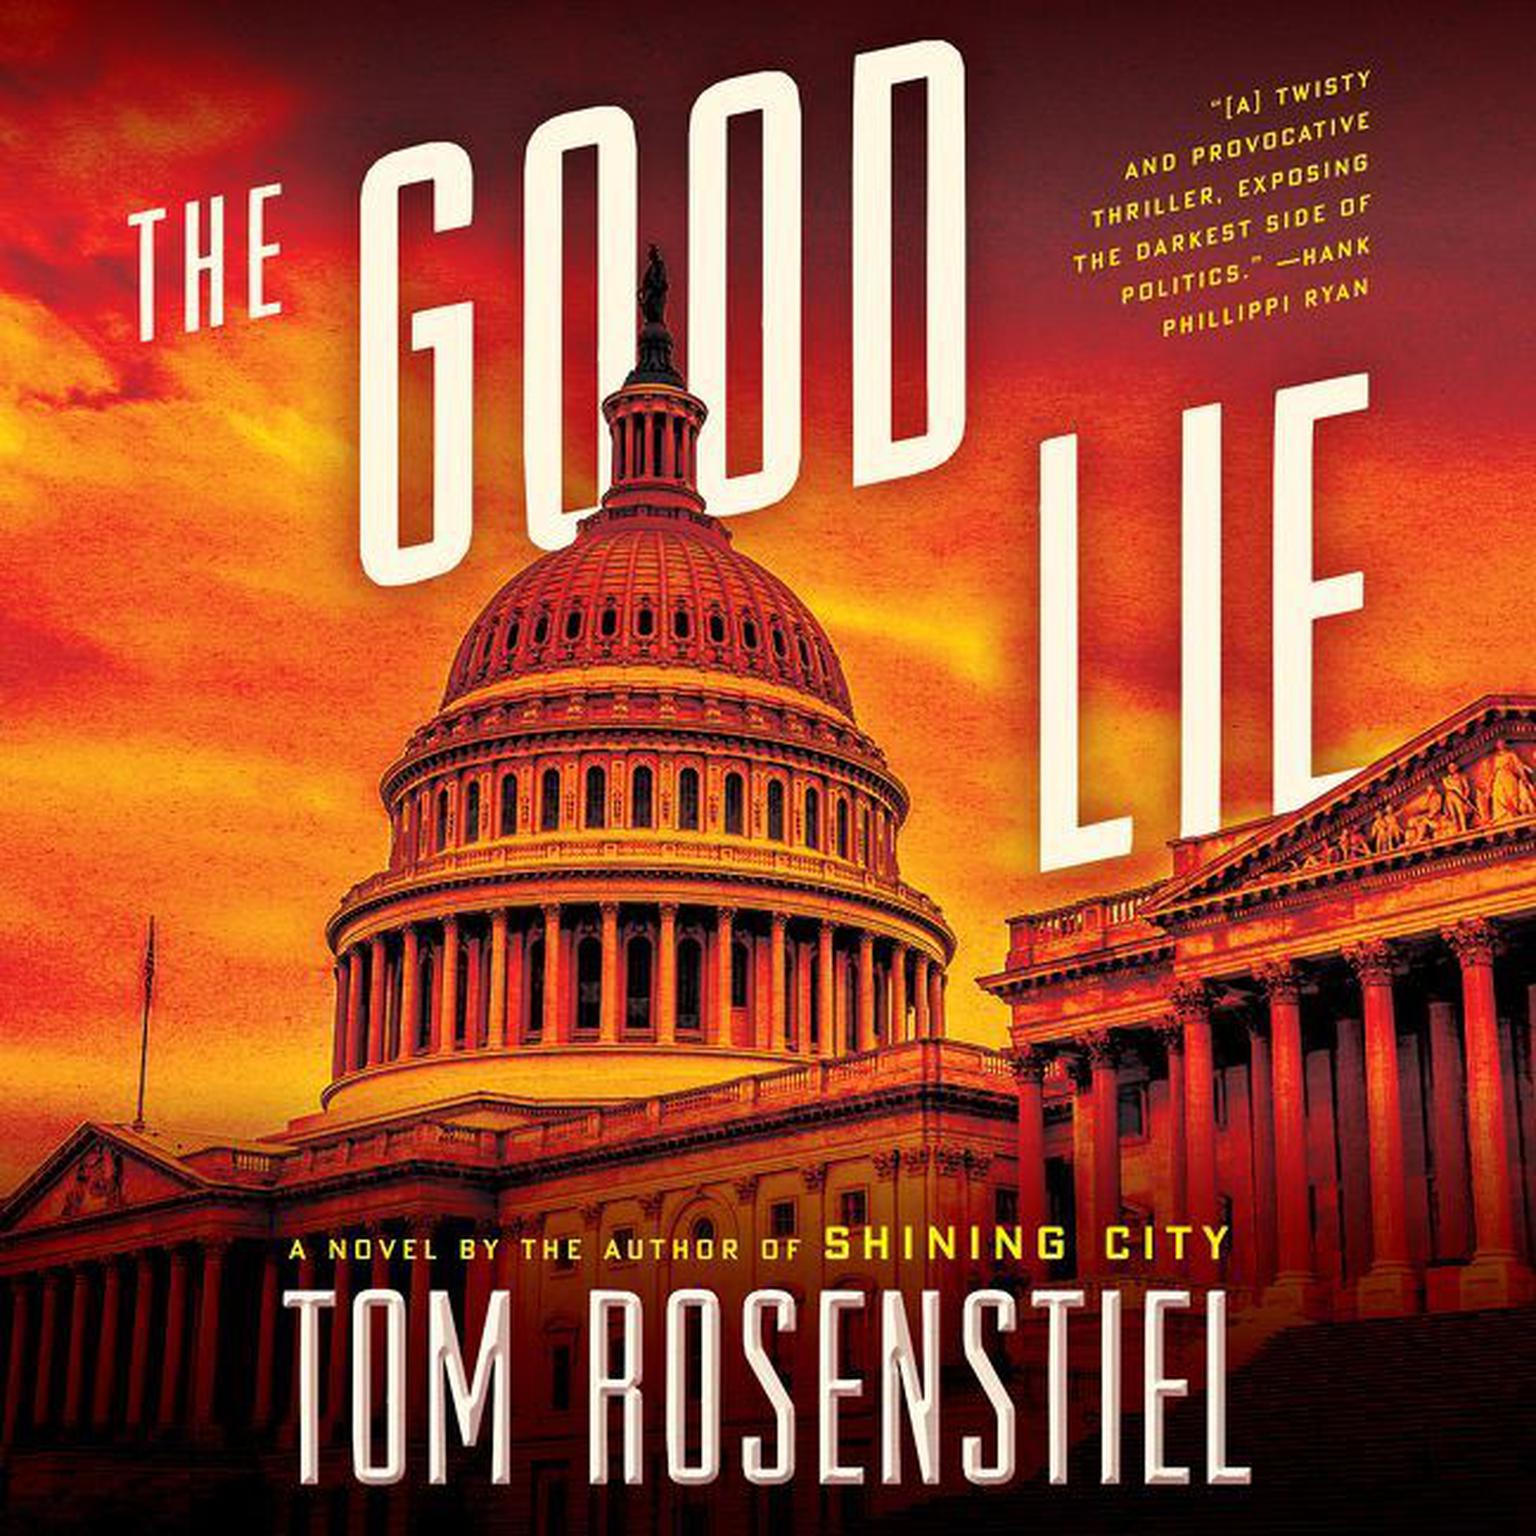 The Good Lie: A Novel Audiobook, by Tom Rosenstiel